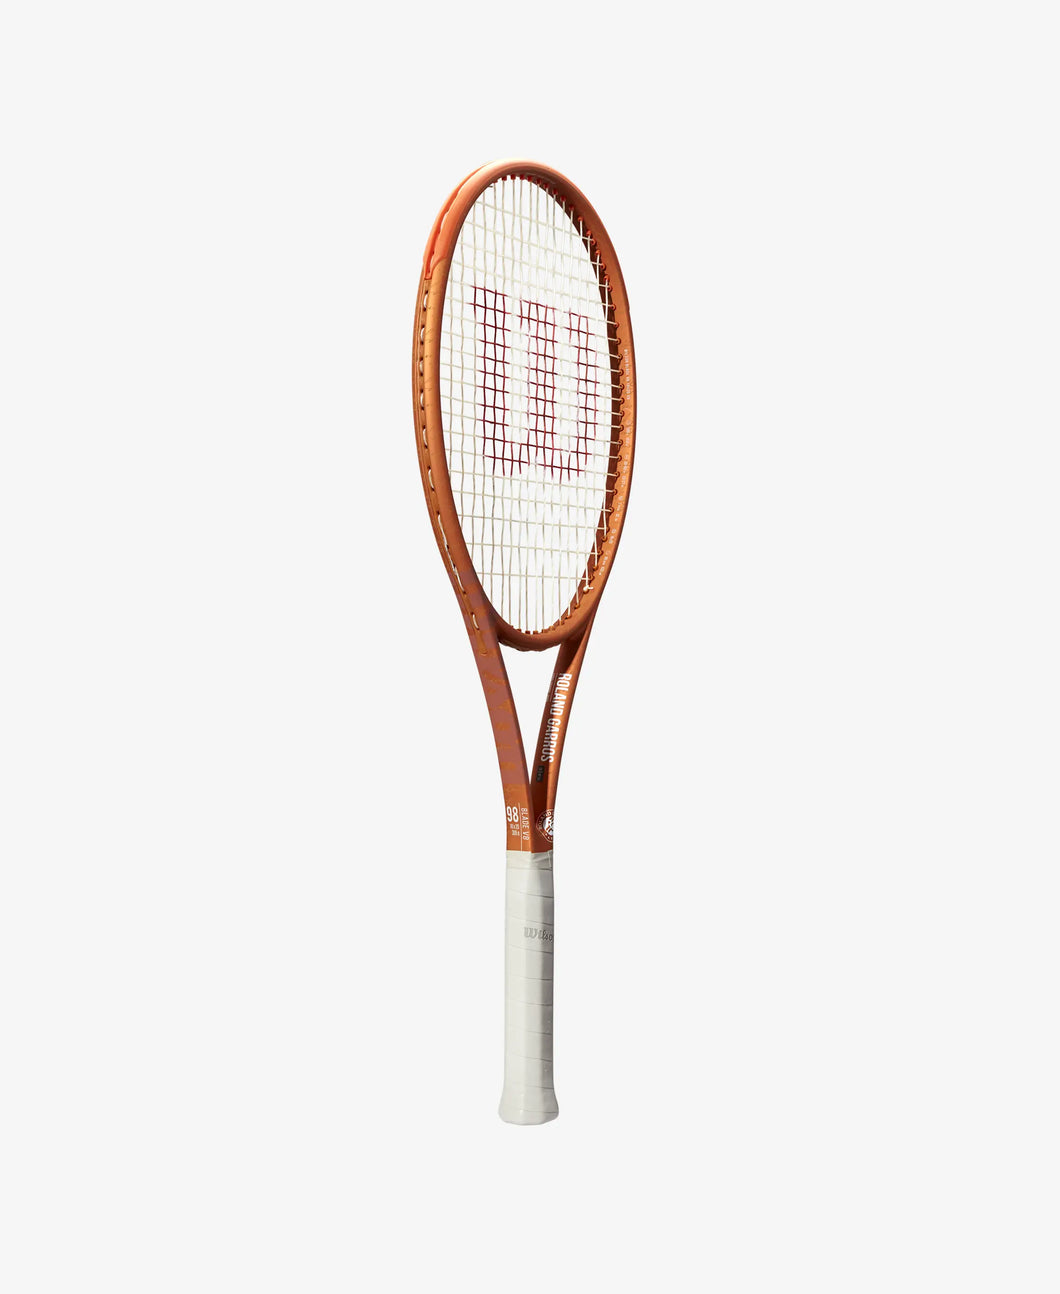 Wilson x Roland Garros Blade 98 v8 (305g) racket - Clay Limited Edition - NEW ARRIVAL